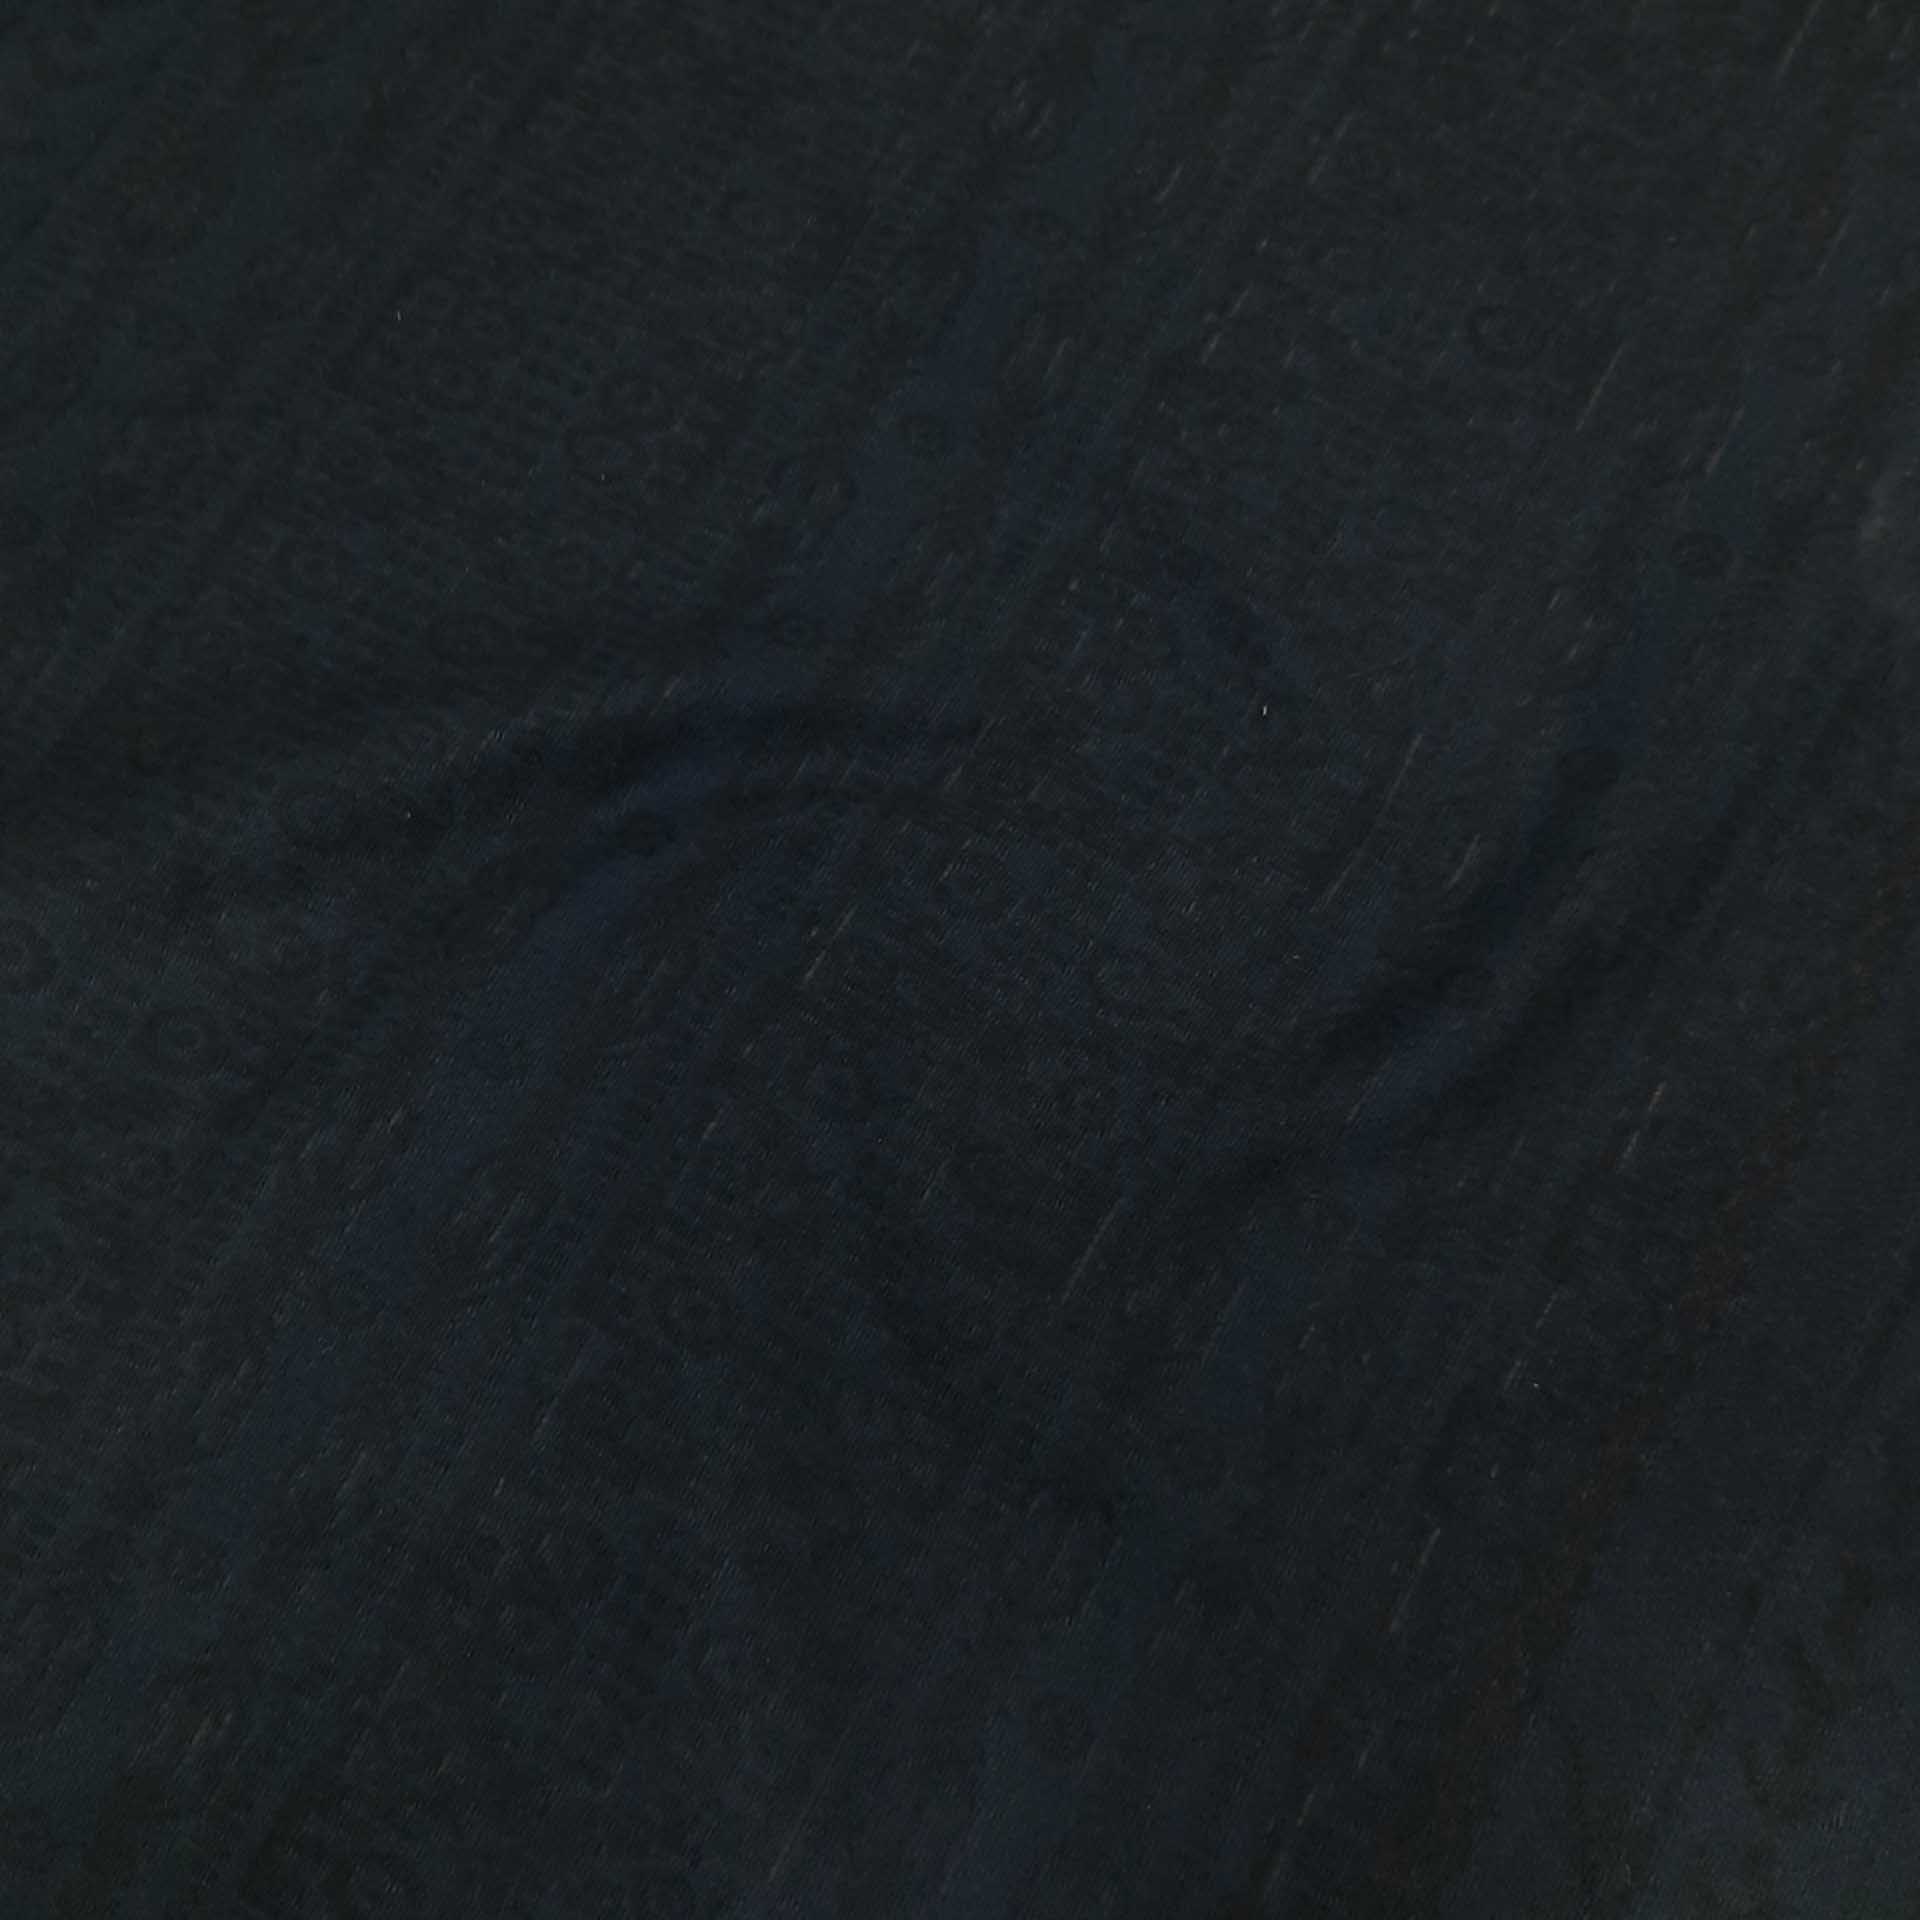 پارچه کشمیر (توییت) رنگ سرمه ای مشکی 